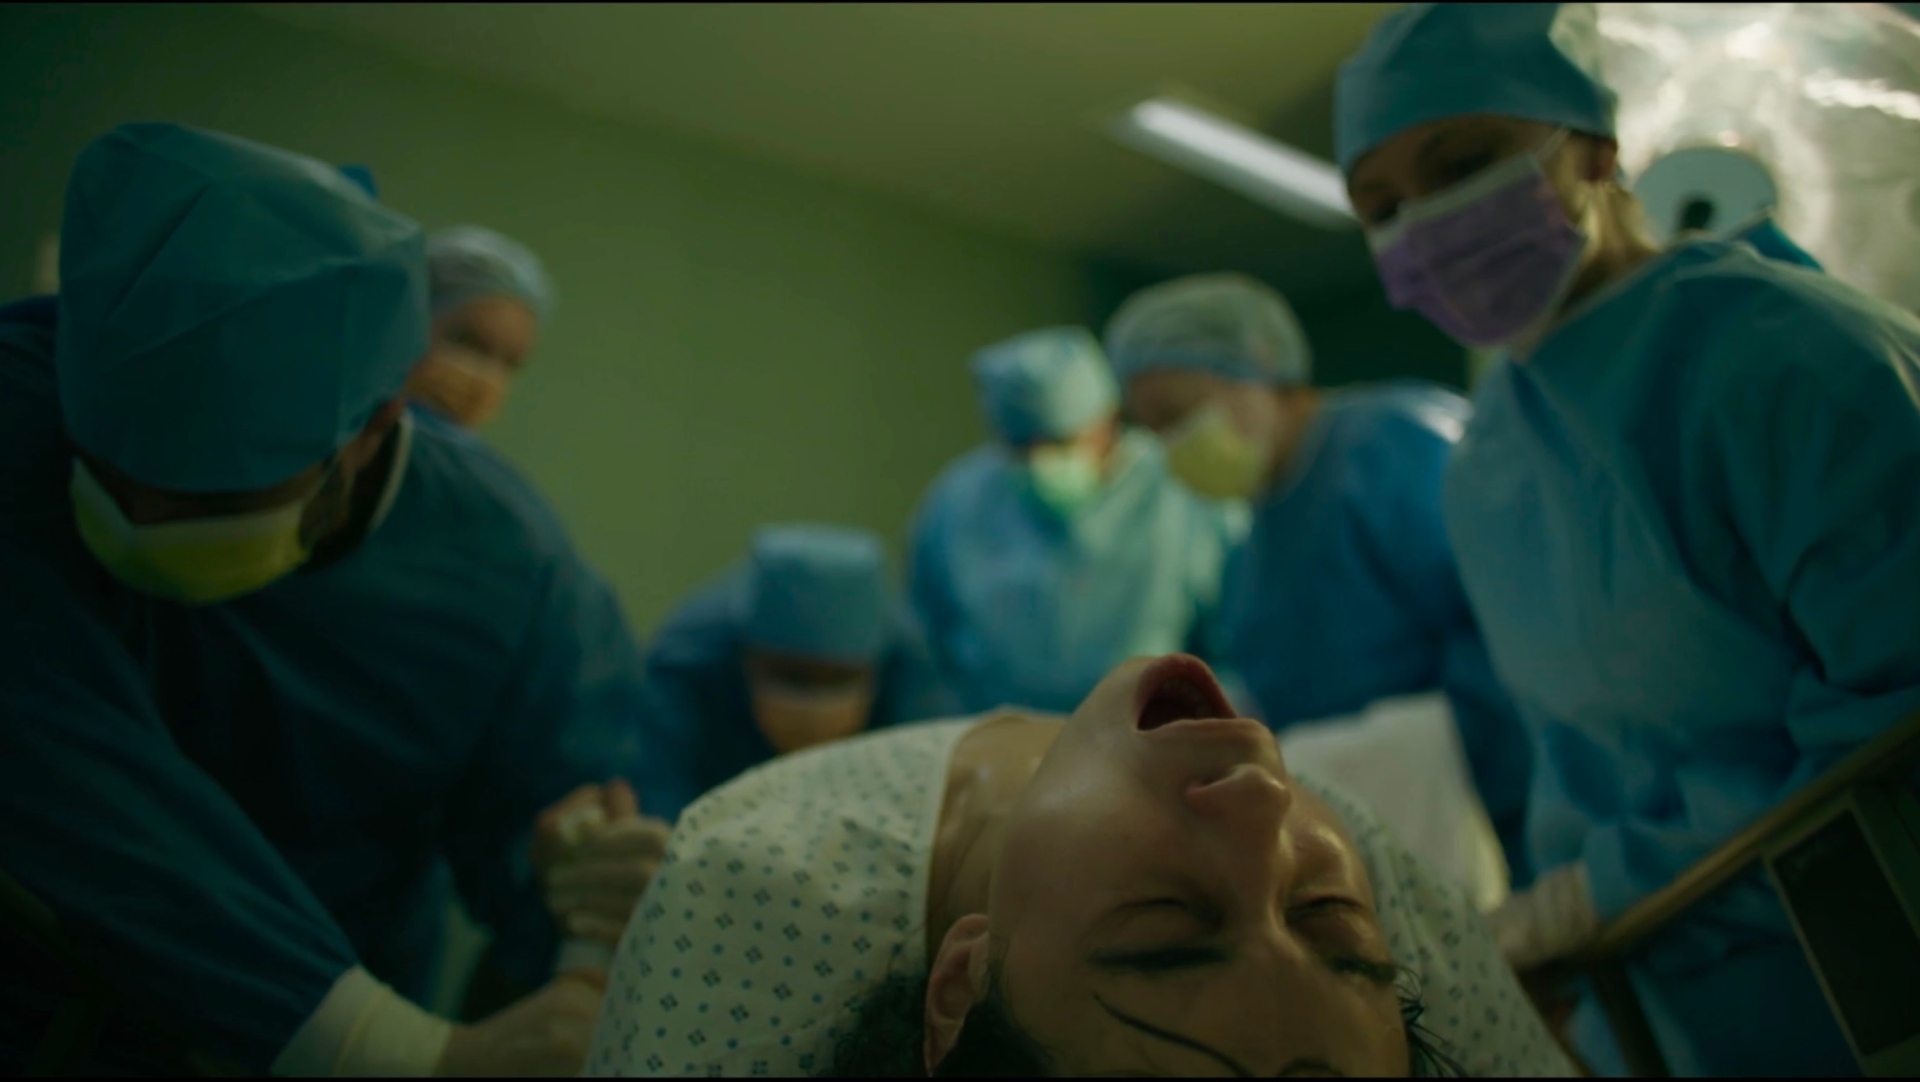 michelle garza cervera película de terror mexicana sobre maternidad 